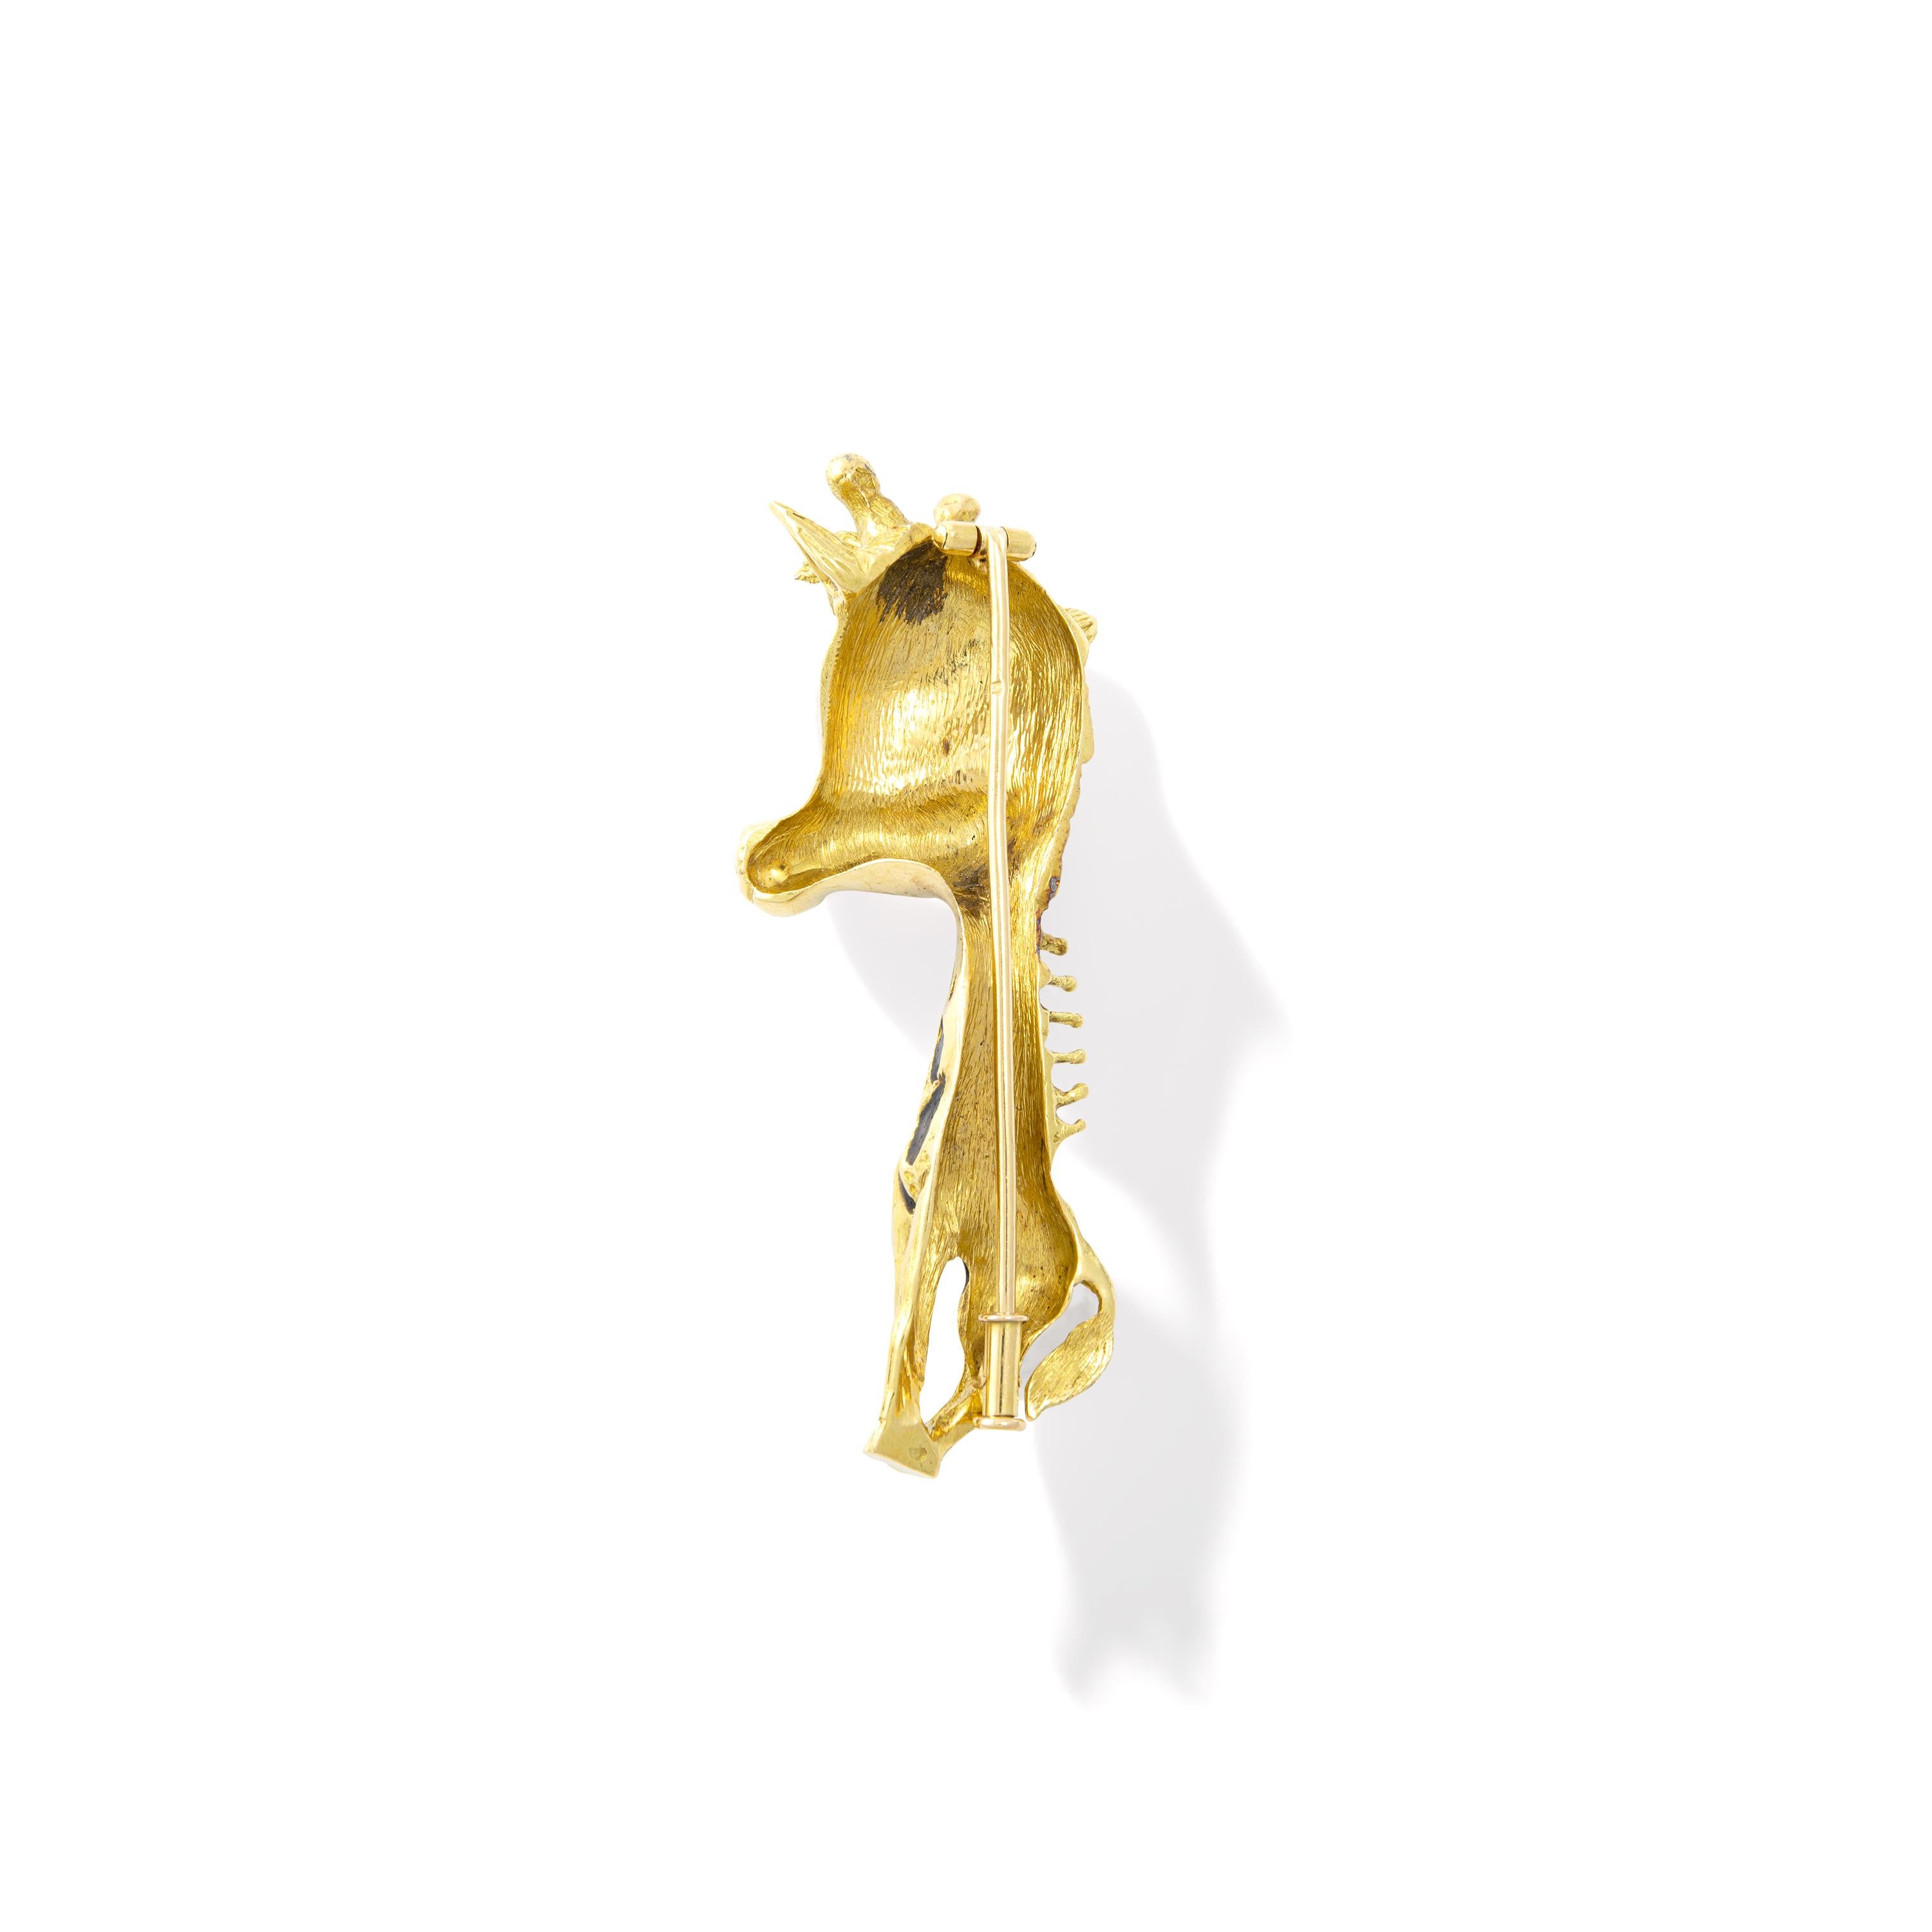 Aesthetic Movement 1970s French Enamel Yellow Gold 18 Karat Giraffe Brooch For Sale